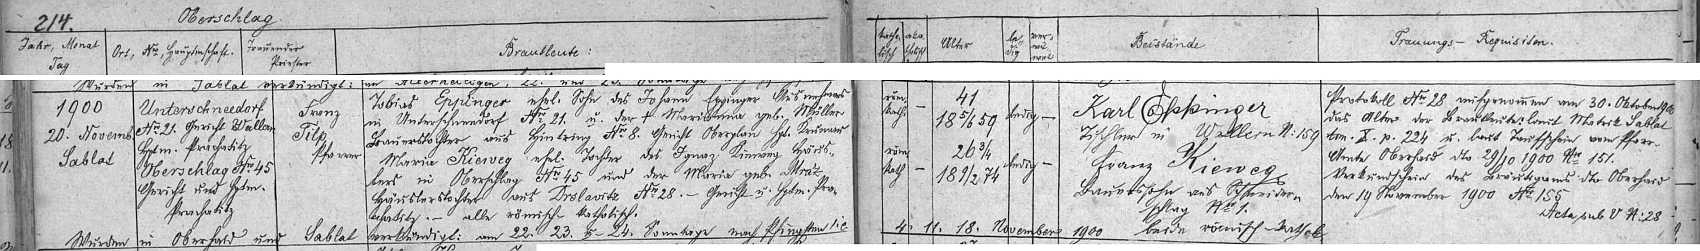 Záznam oddací matriky farní obce Záblatí o svatbě jeho prarodičů Tobiase a Marie Eppingerových